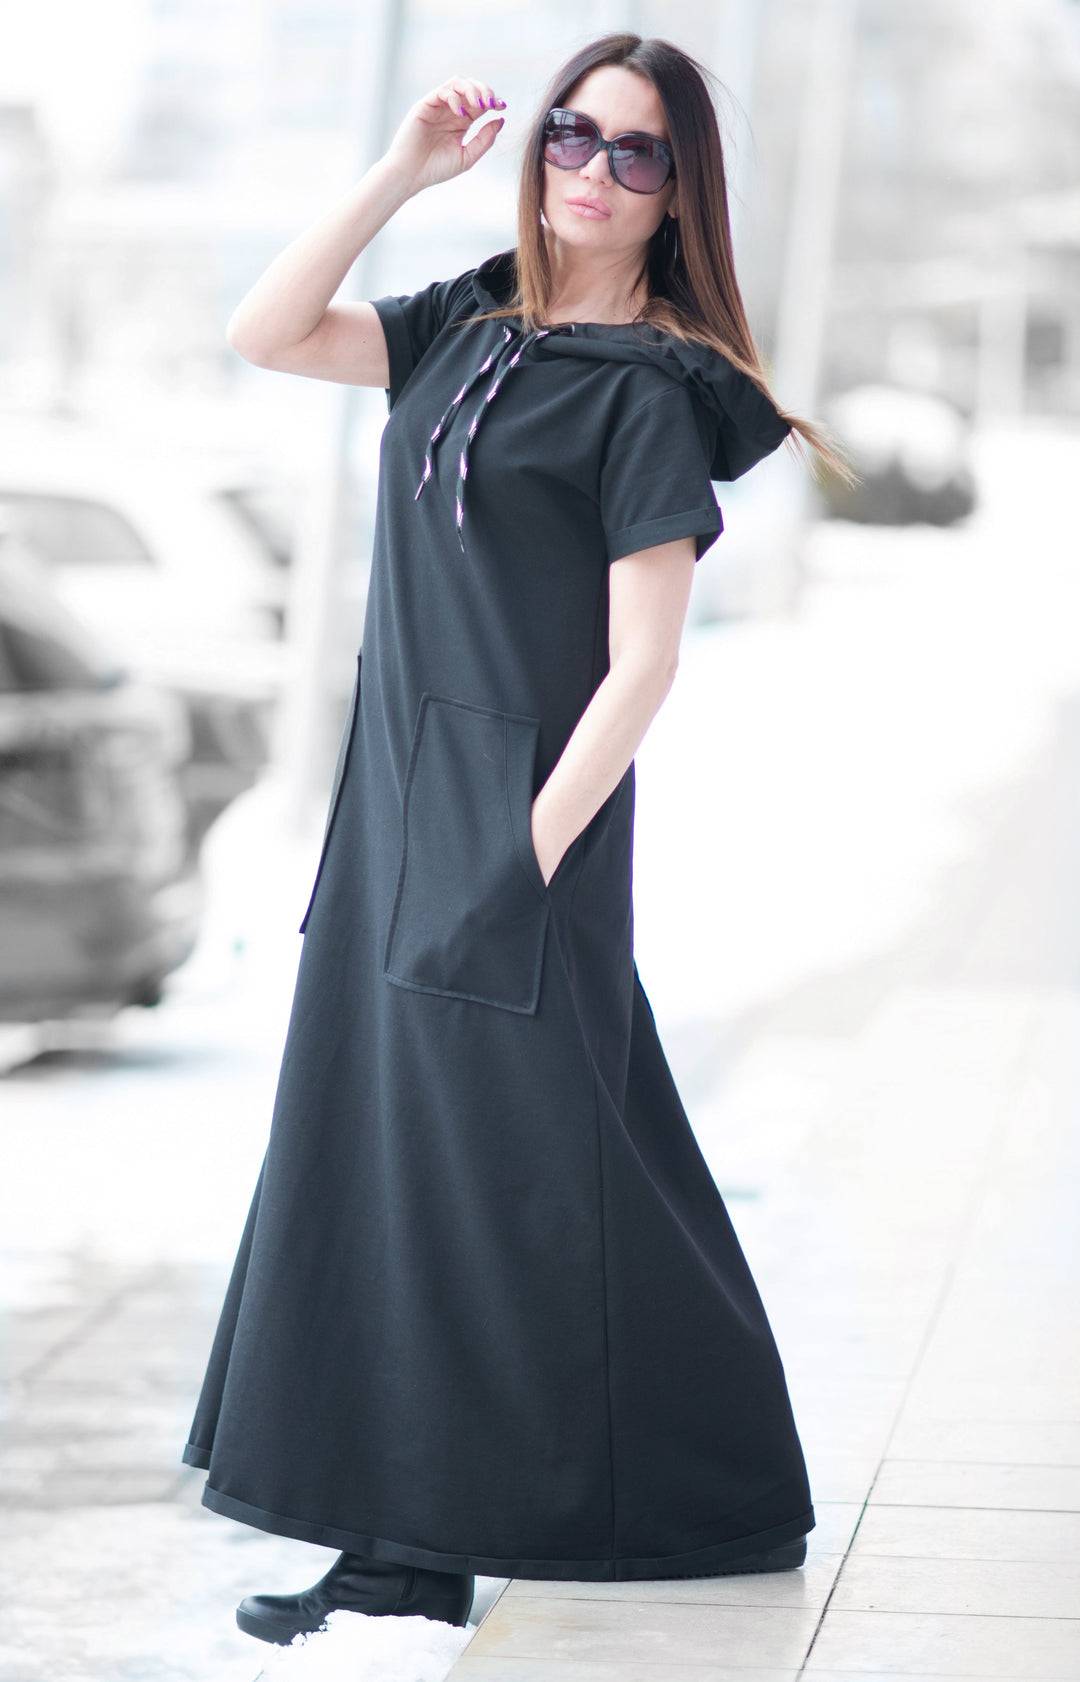 Black Long Hooded Dress